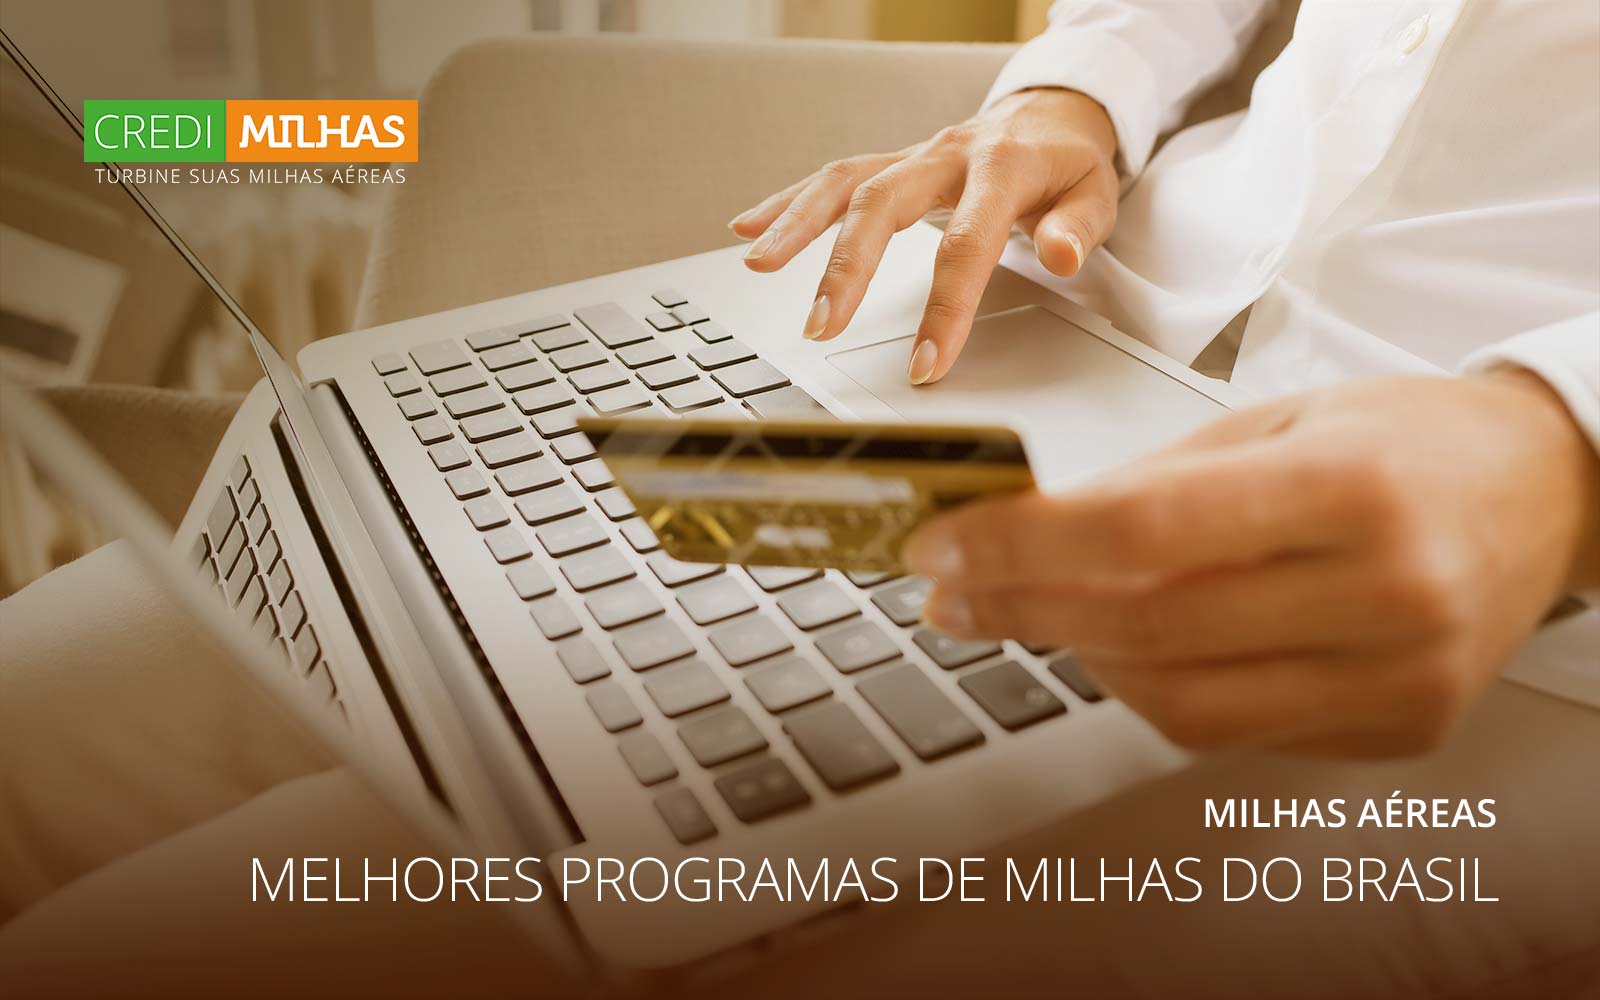 credimilhas-compra-milhas-aereas-milhas-aereas-melhores-programas-milhas-aereas-brasil-2017-02